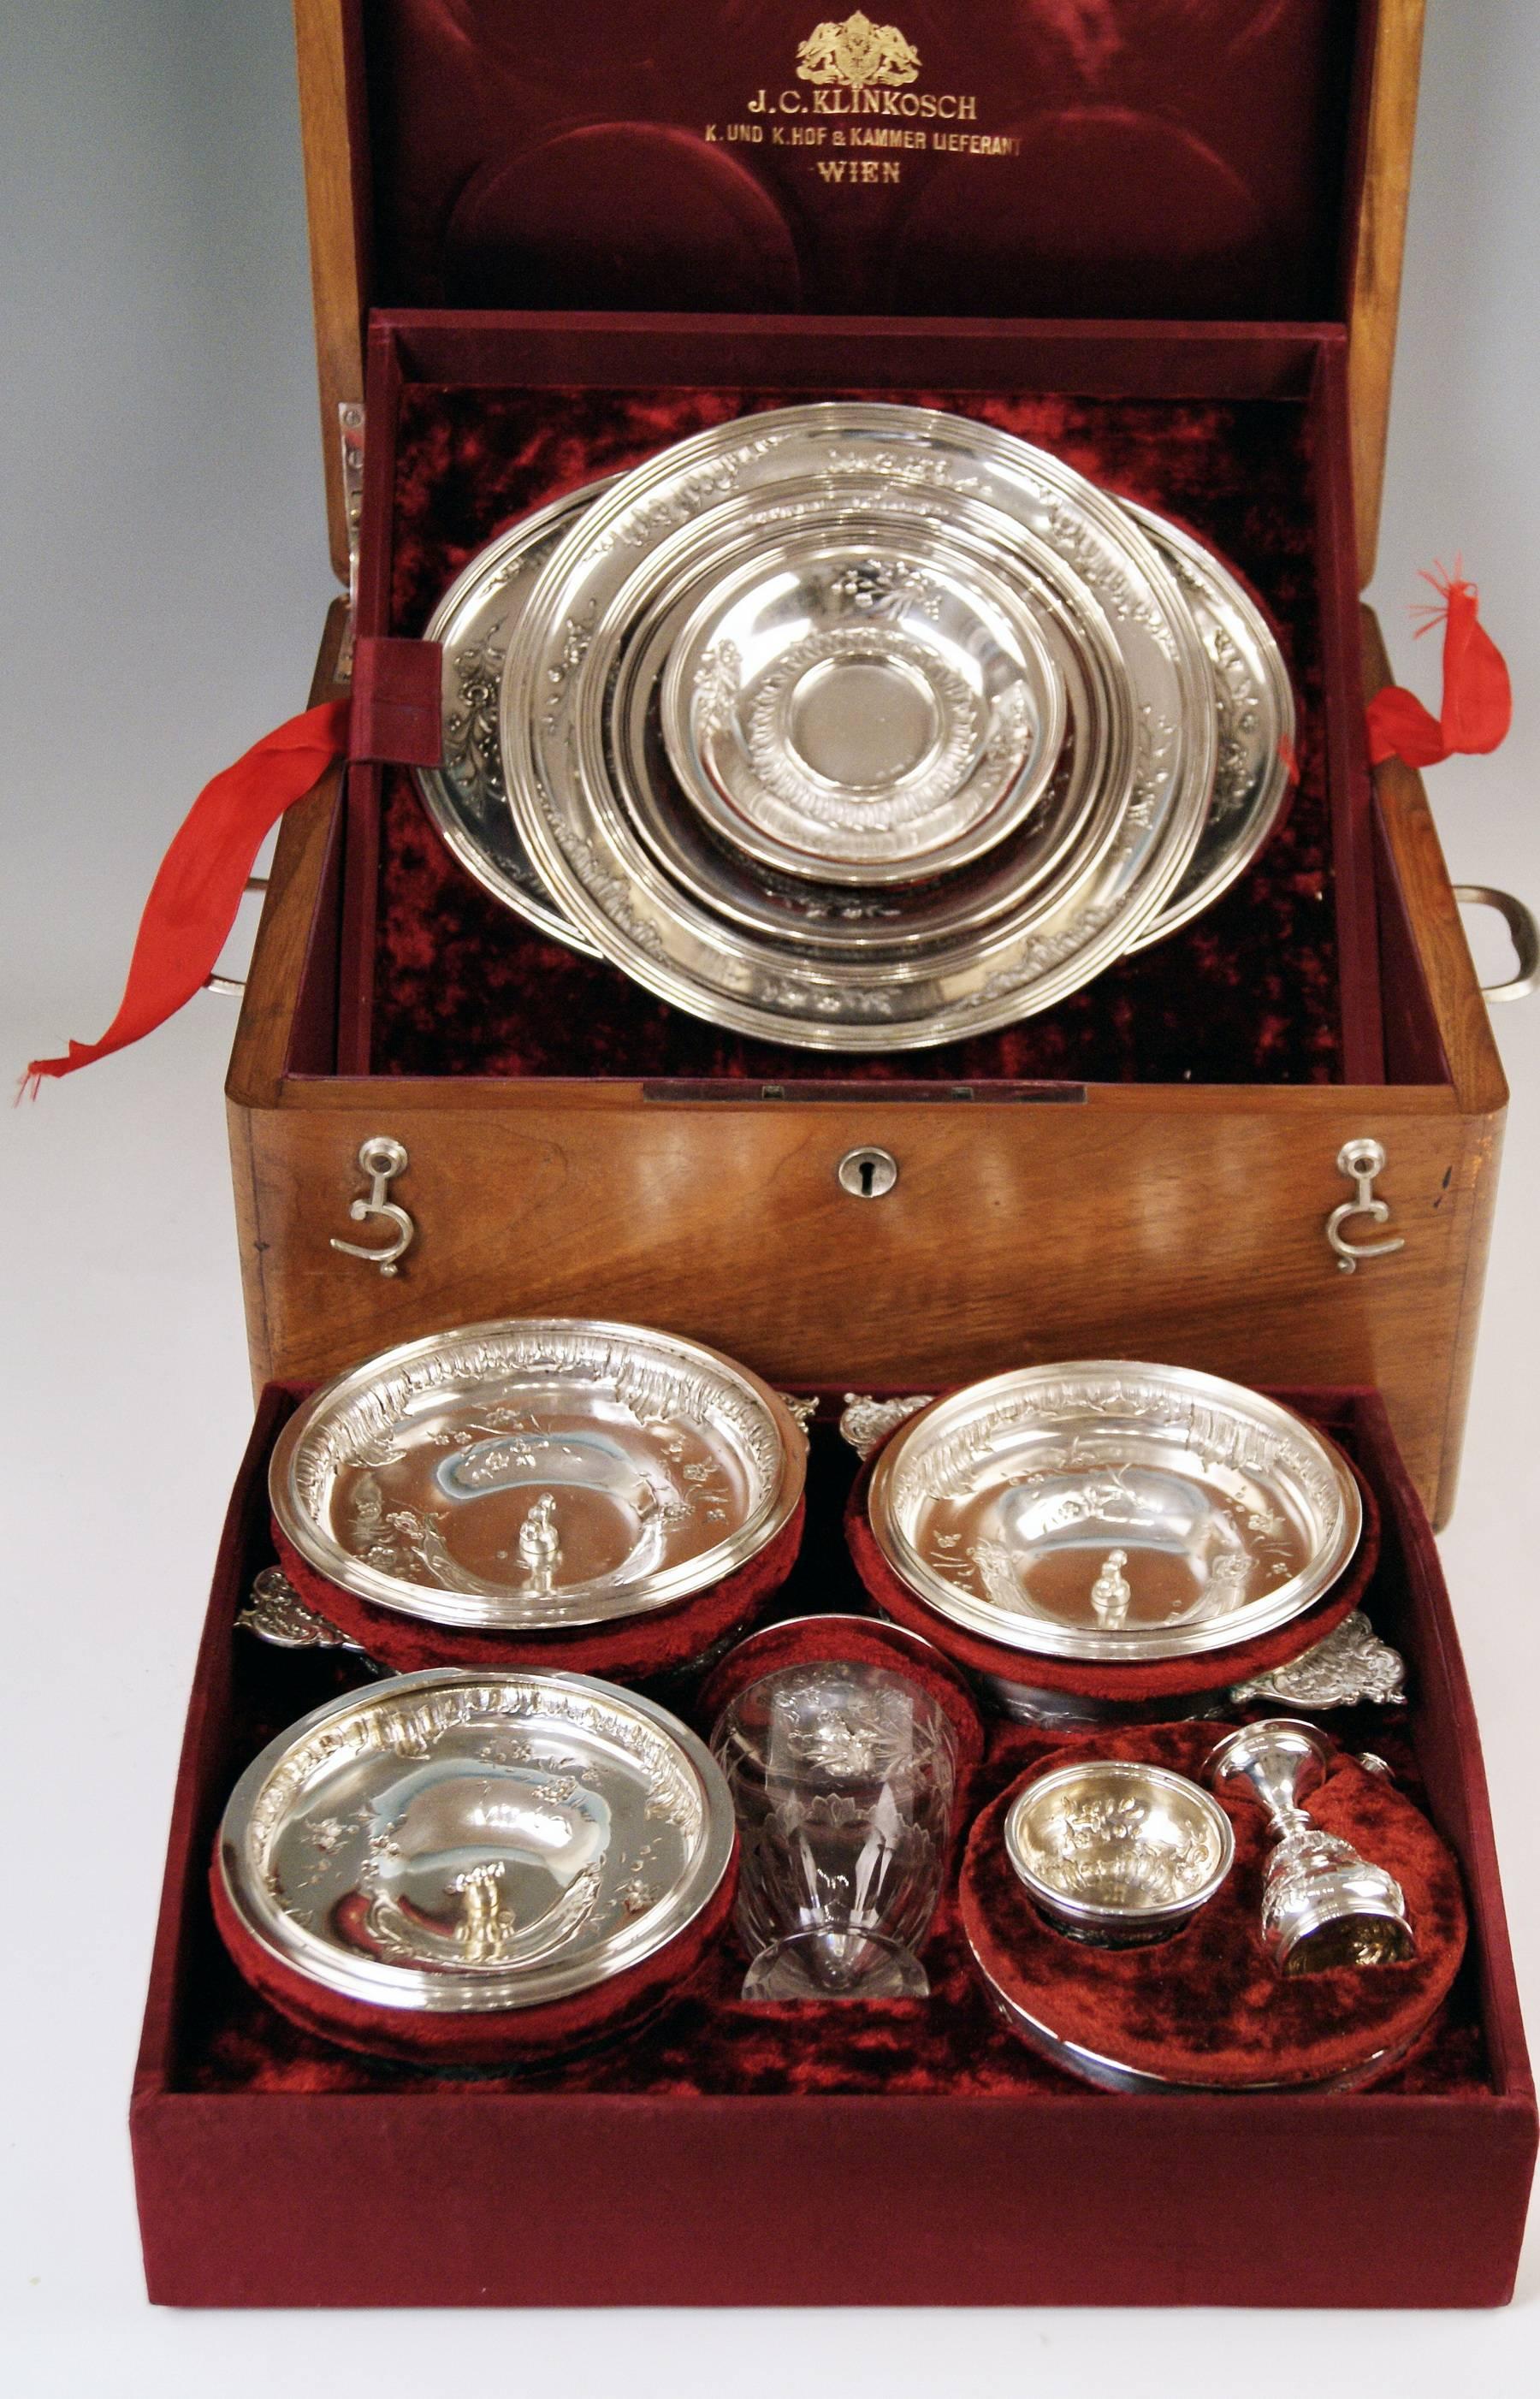 Silver Austria Vienna Set of Dishes Countess Sandizell-Lamberg by Klinkosch 3